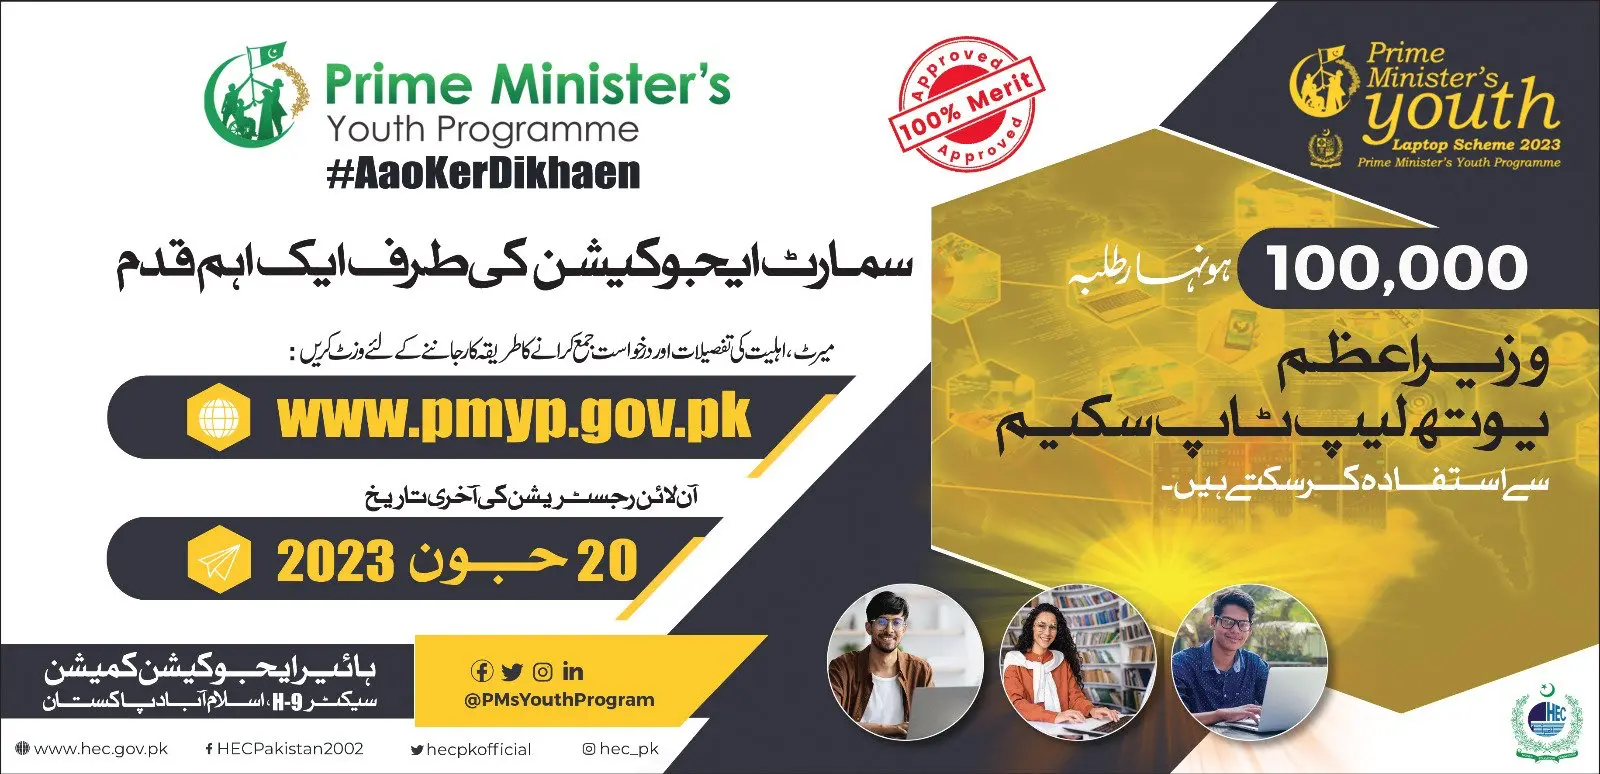 PM Laptop Distribution Scheme 2023 Registration